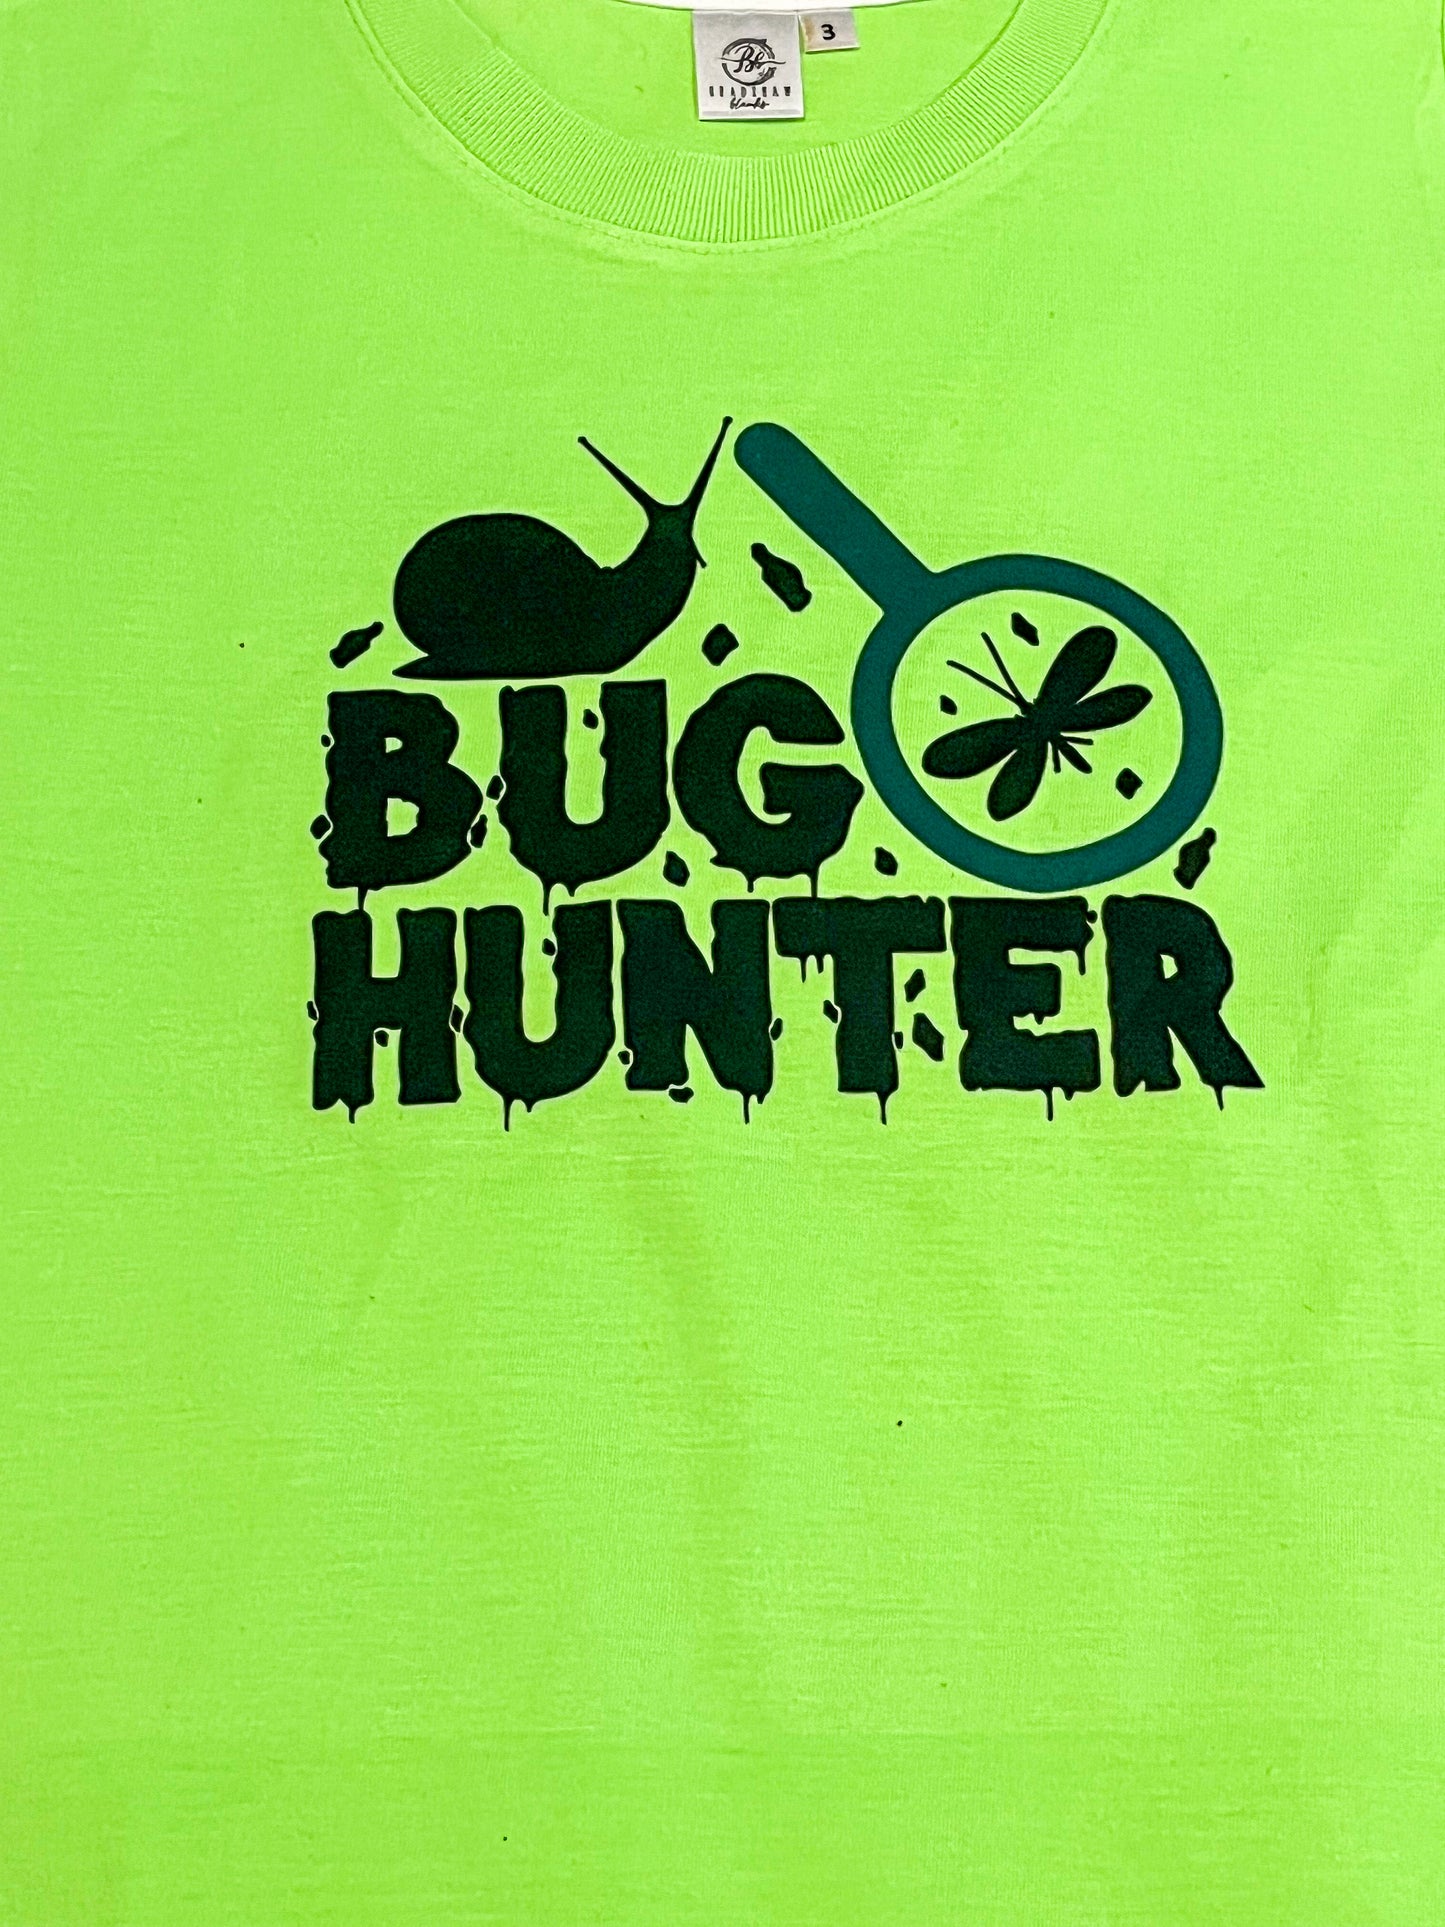 Bug Hunter Shirt